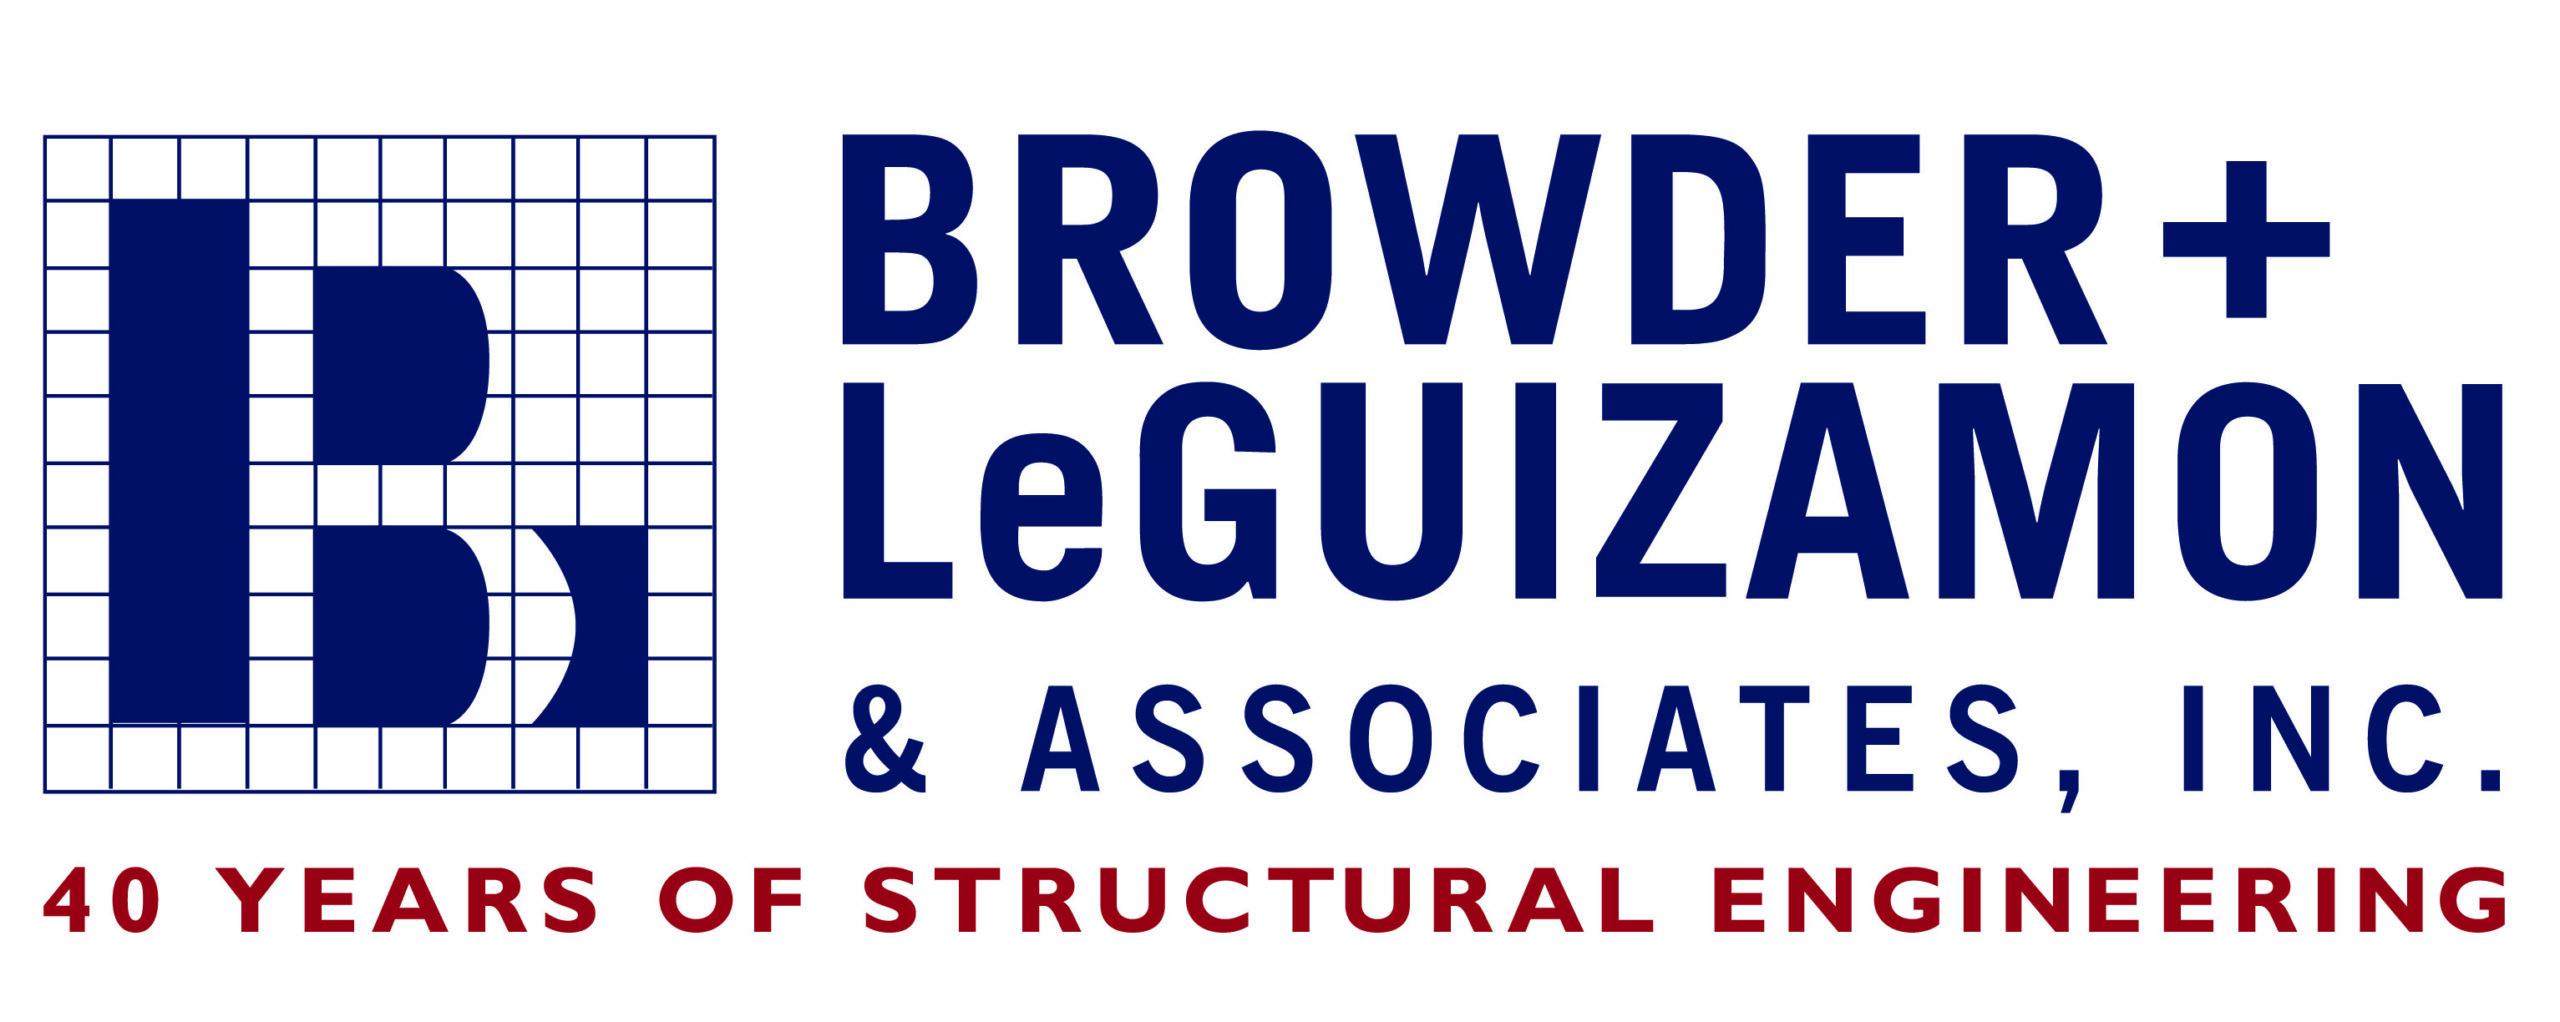 Browder + LeGuizamon and Associates, Inc.